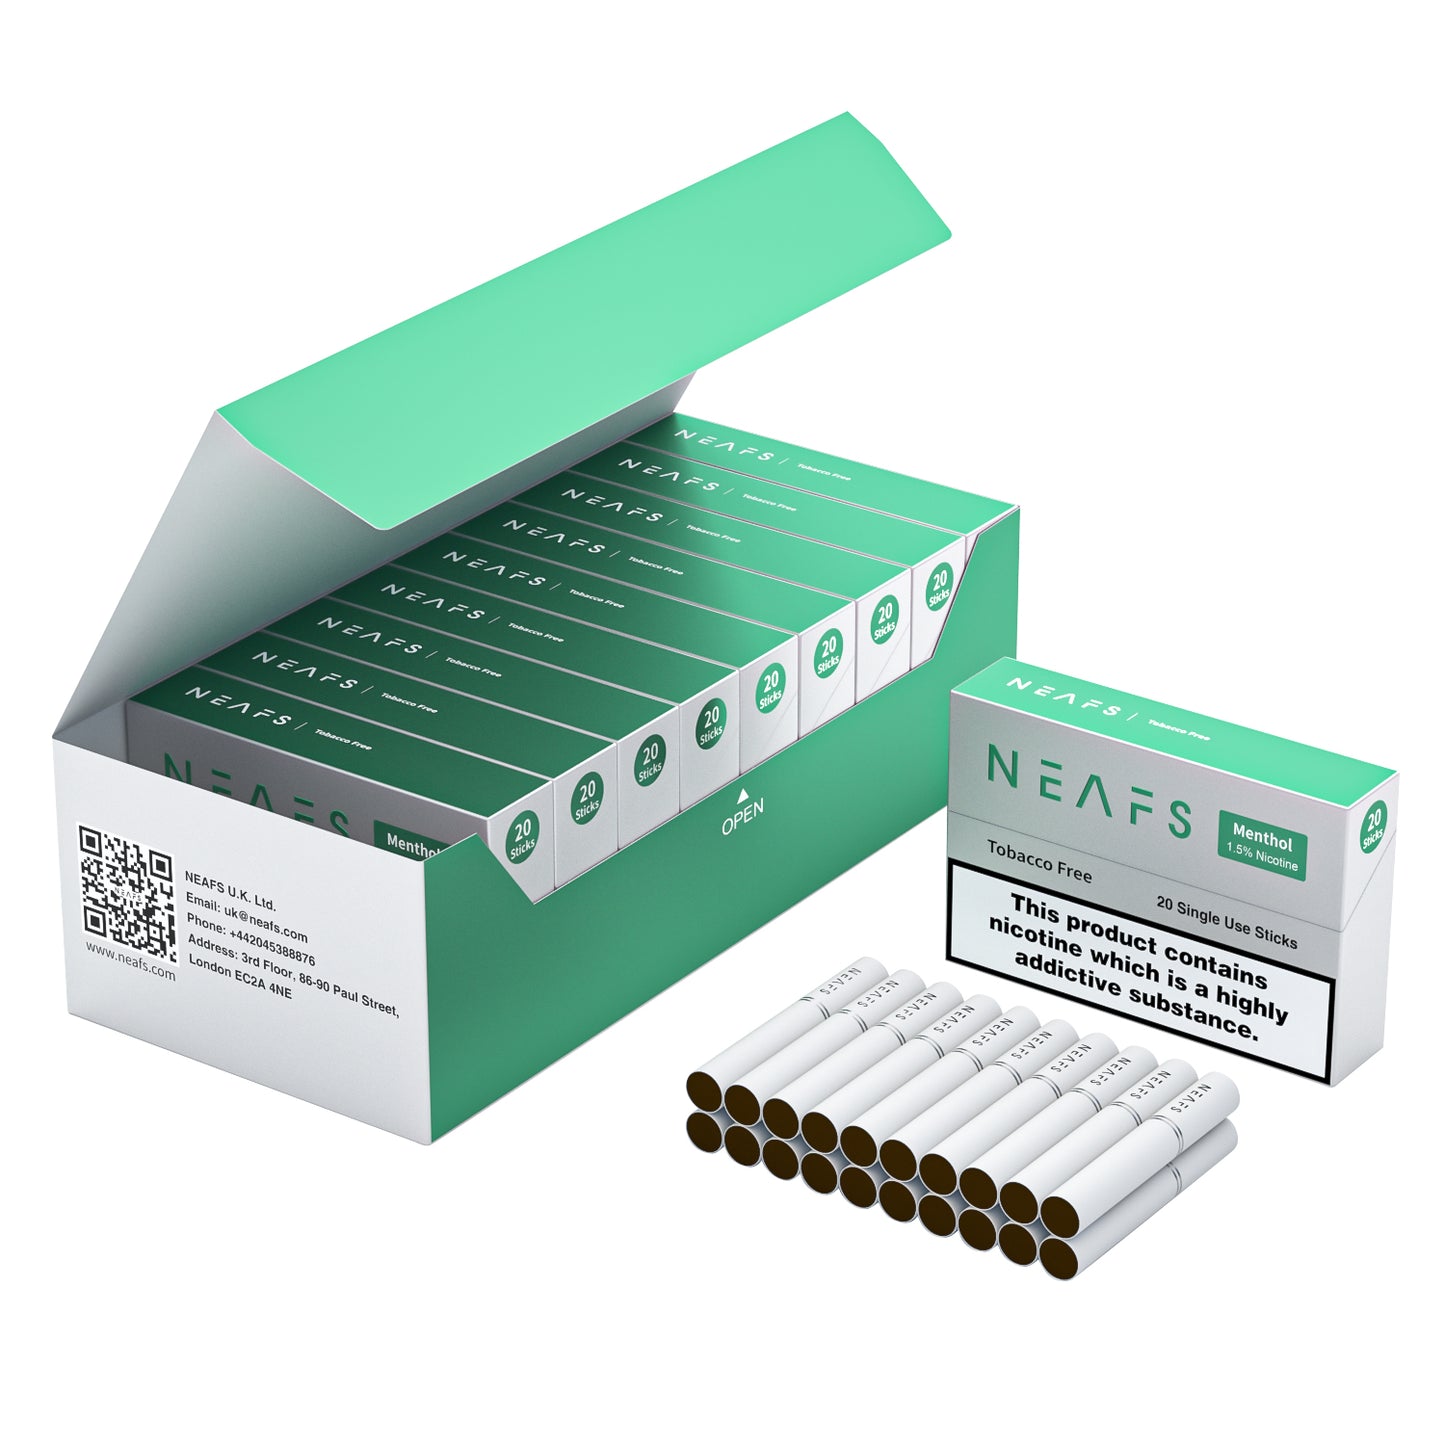 NEAFS Menthol Tobacco Free Heated Sticks – 200 Sticks